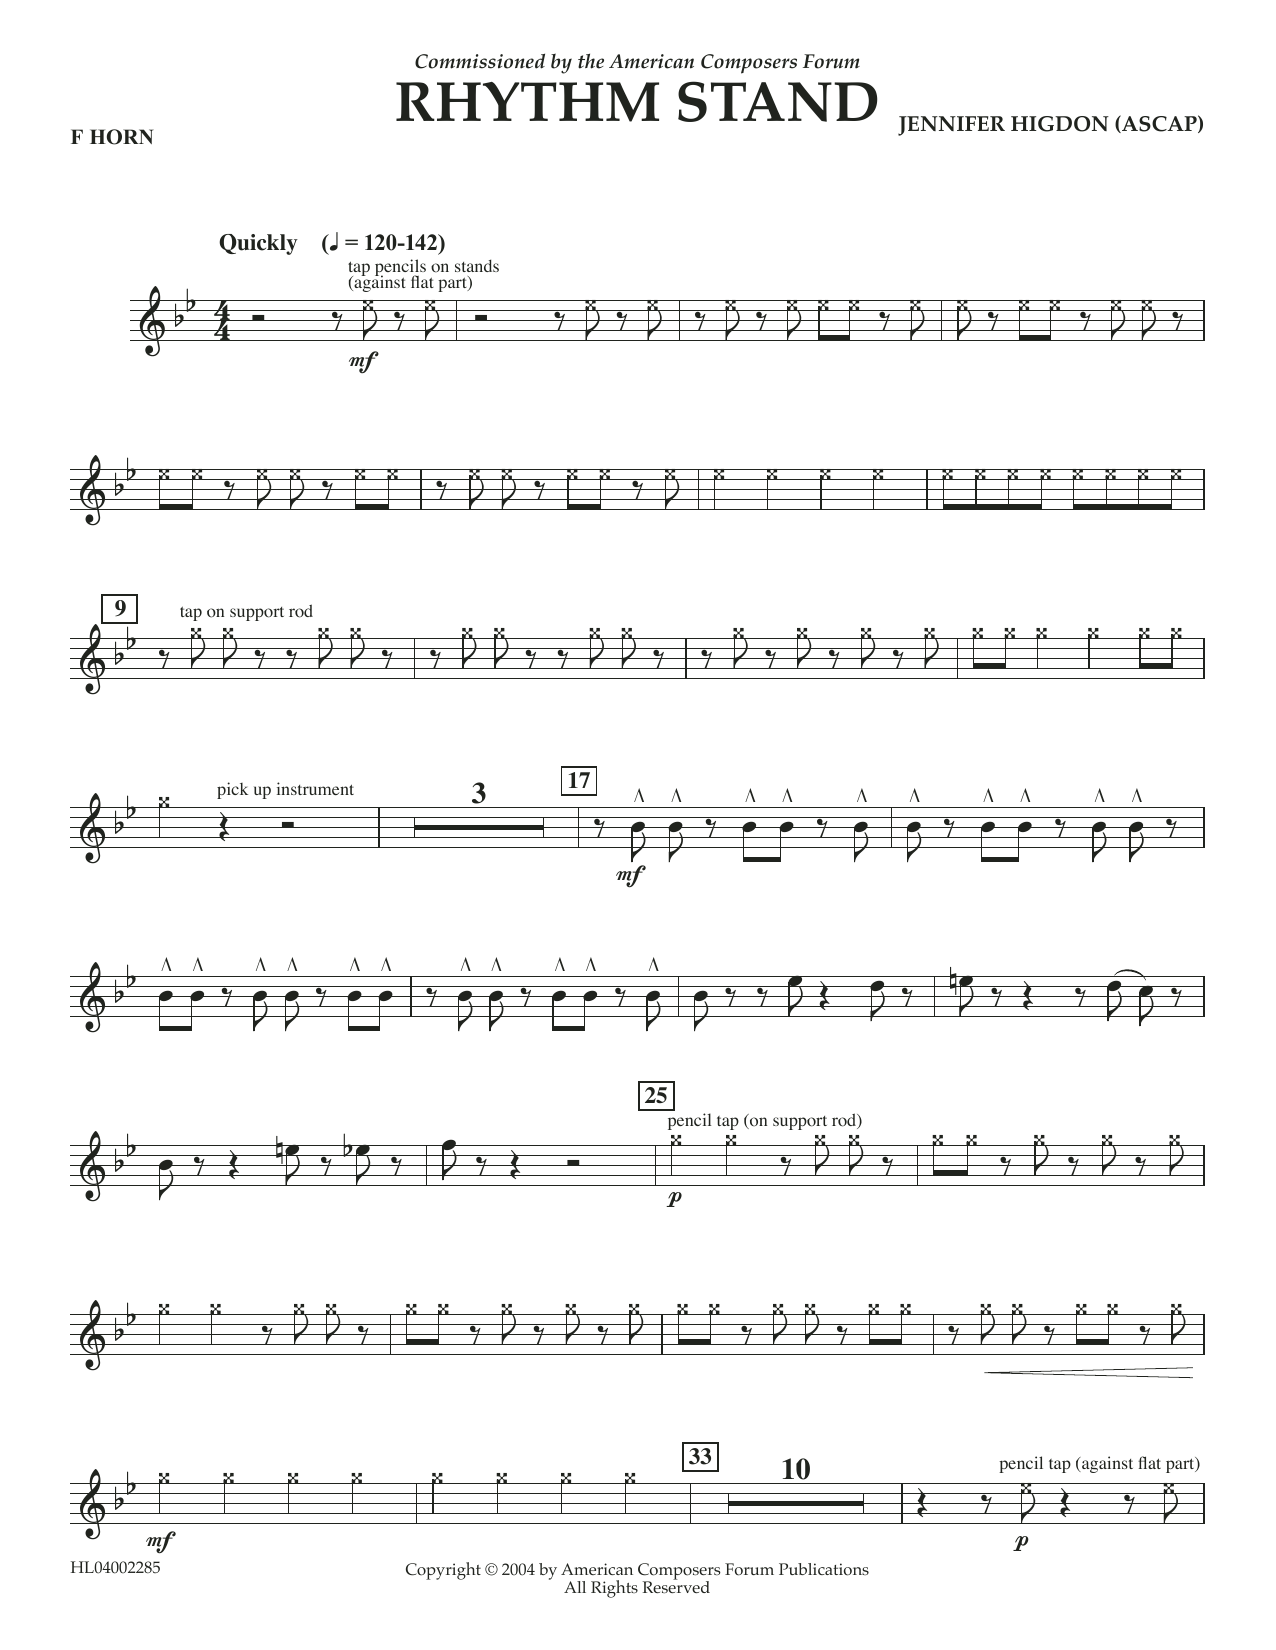 Jennifer Higdon Rhythm Stand - F Horn Sheet Music Notes & Chords for Concert Band - Download or Print PDF